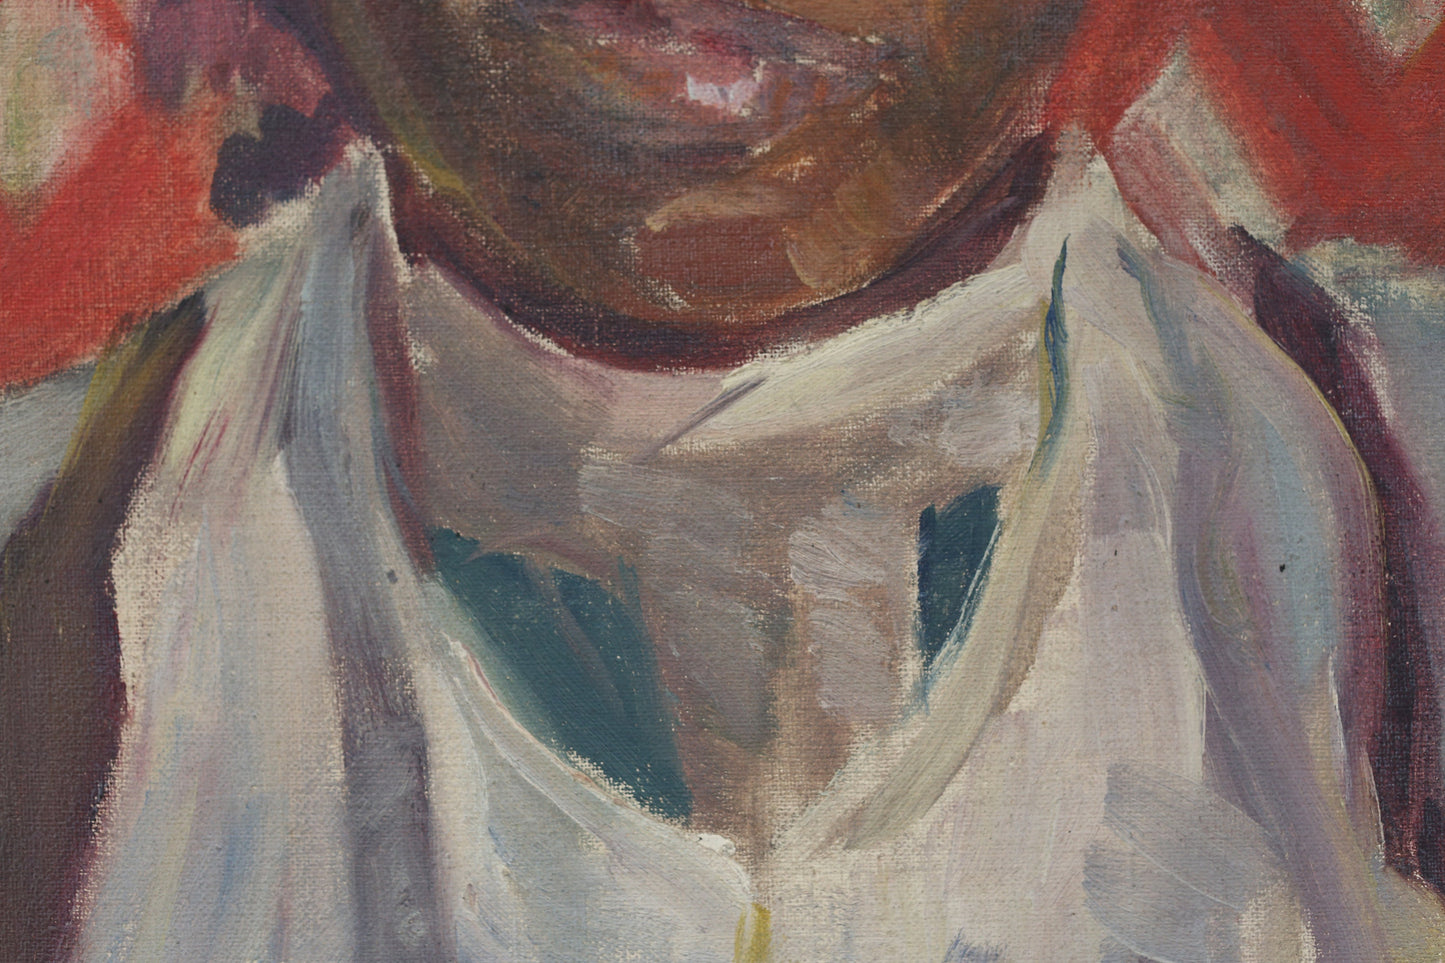 Ruth Bamberger Painting Black African Woman Culture Modernist Oil on Canvas Portrait Antique Art 1927 Paris Martinique Israel